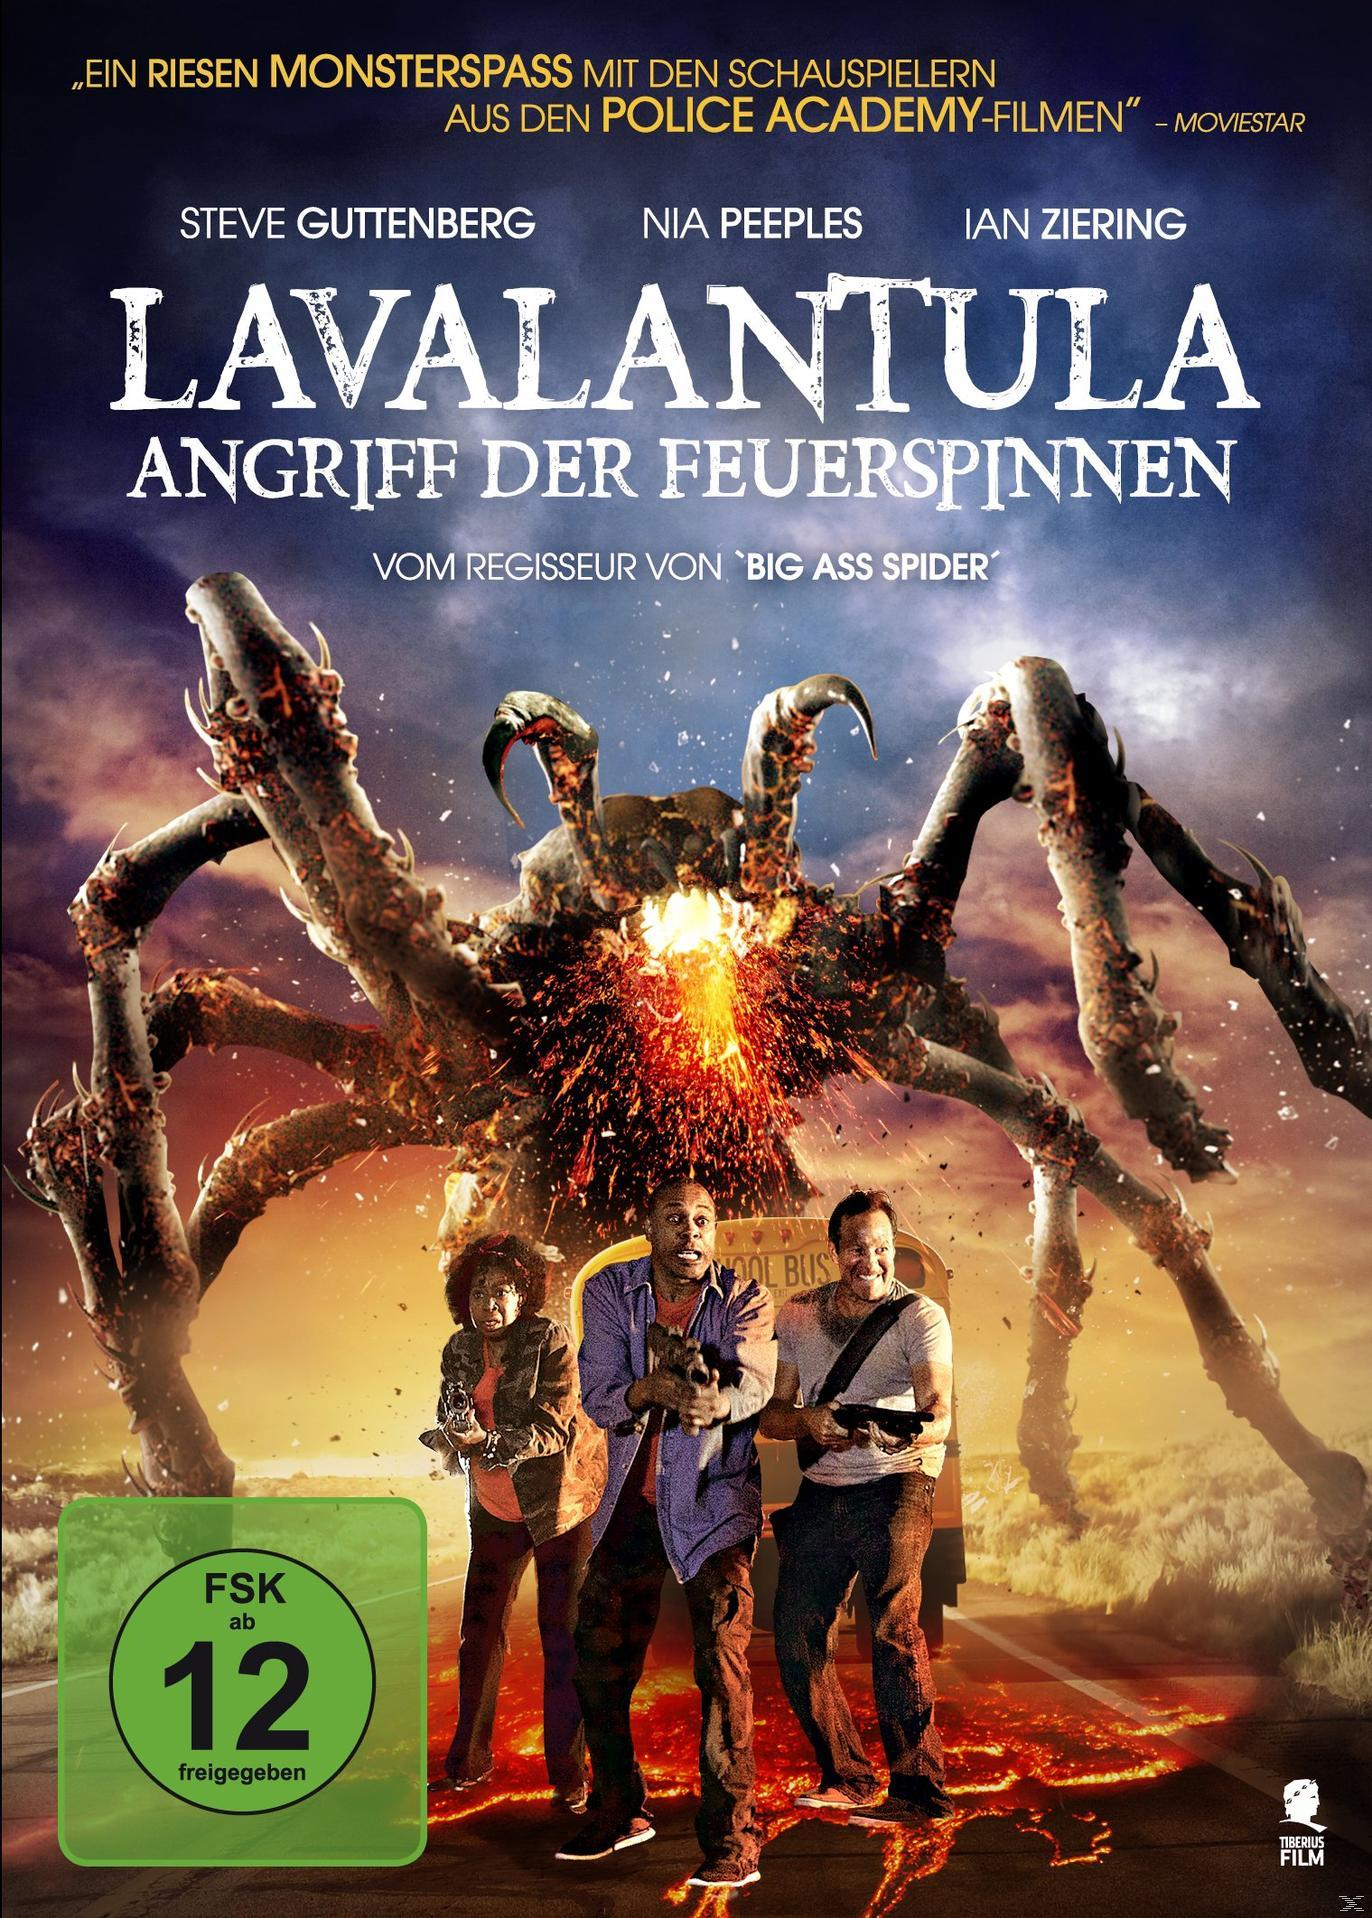 Feuerspinnen Angriff Lavalantula - der DVD